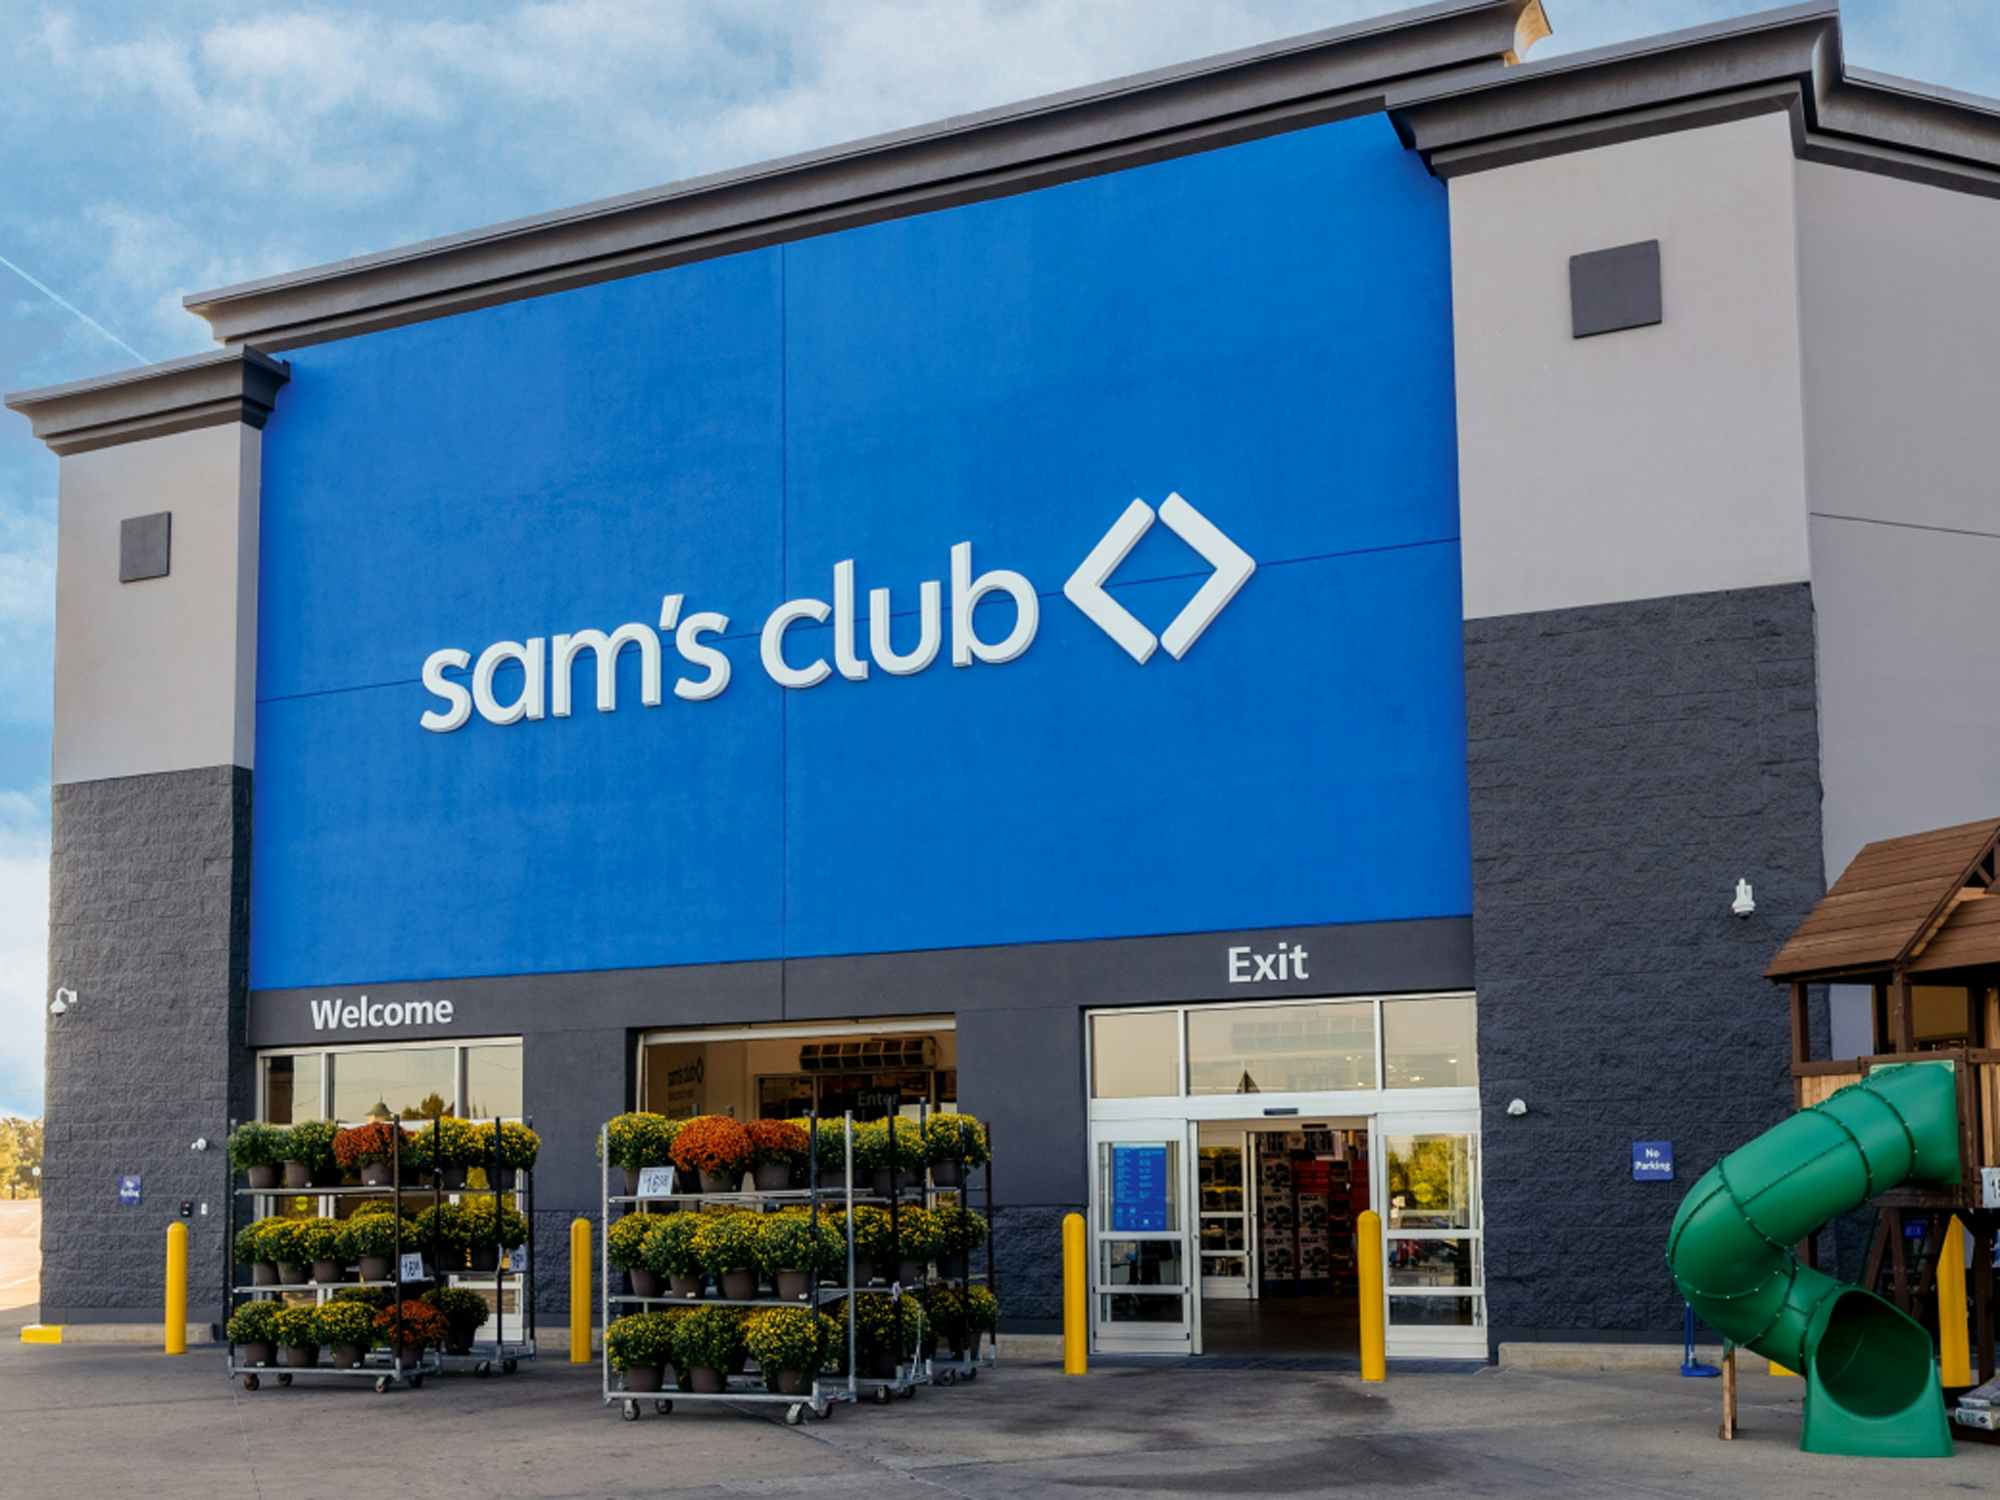 The exterior of a Sam's Club store